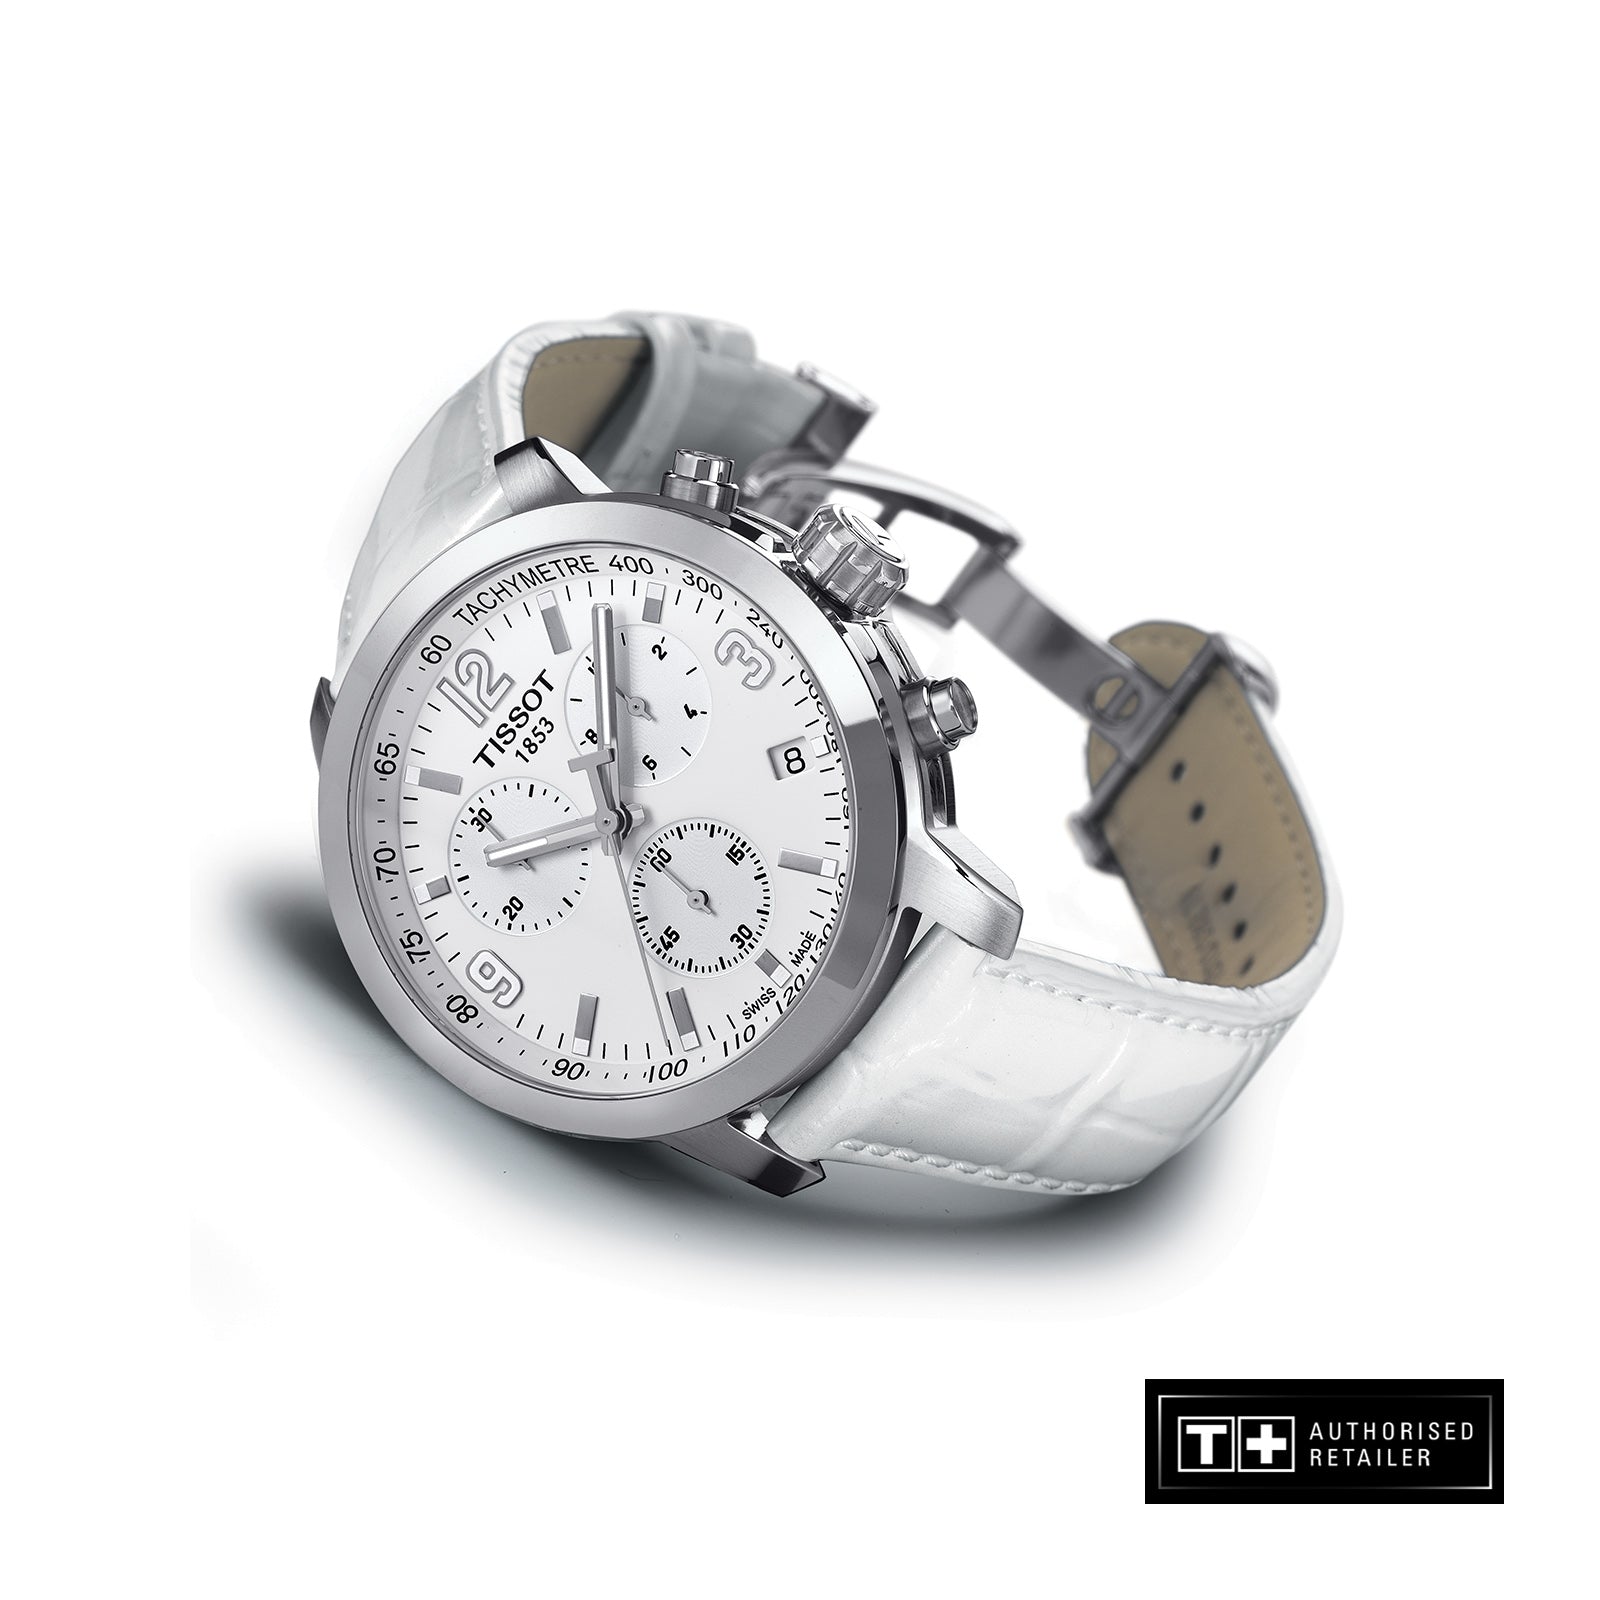 Tissot PRC 200 Chronograph White Dial White Leather Strap Watch For Men - T055.417.16.017.00